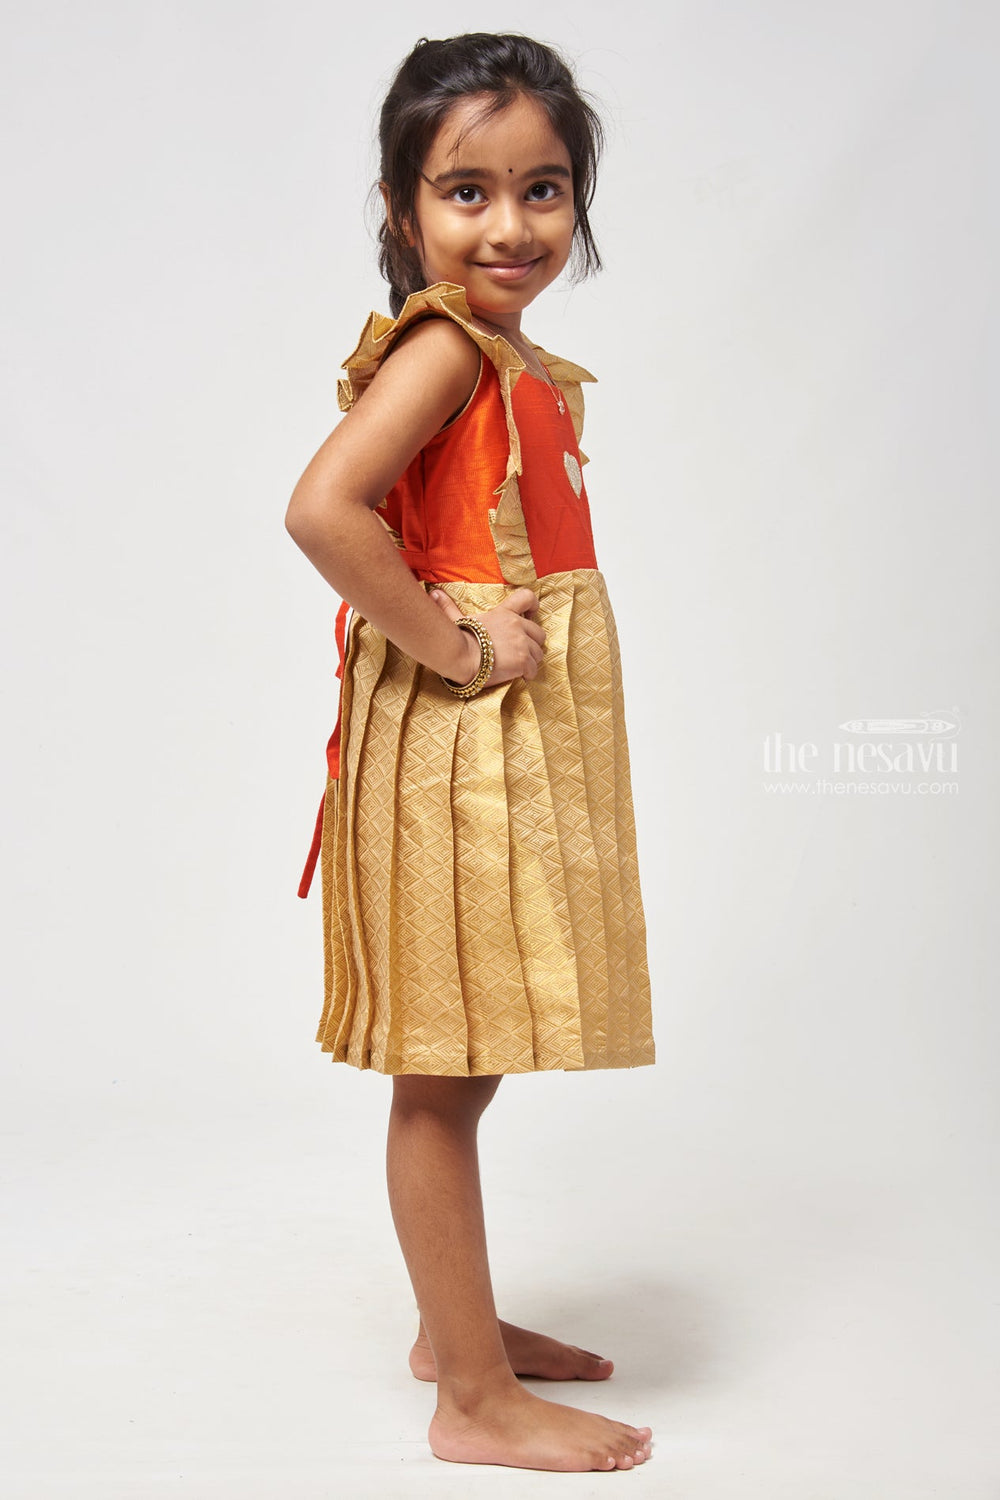 The Nesavu Silk Frock Brocade Designer Reshmi Frock in Beige with Flared Design Yoke Nesavu Silk Designer Frock | Baby Girls Silk Gown | The Nesavu